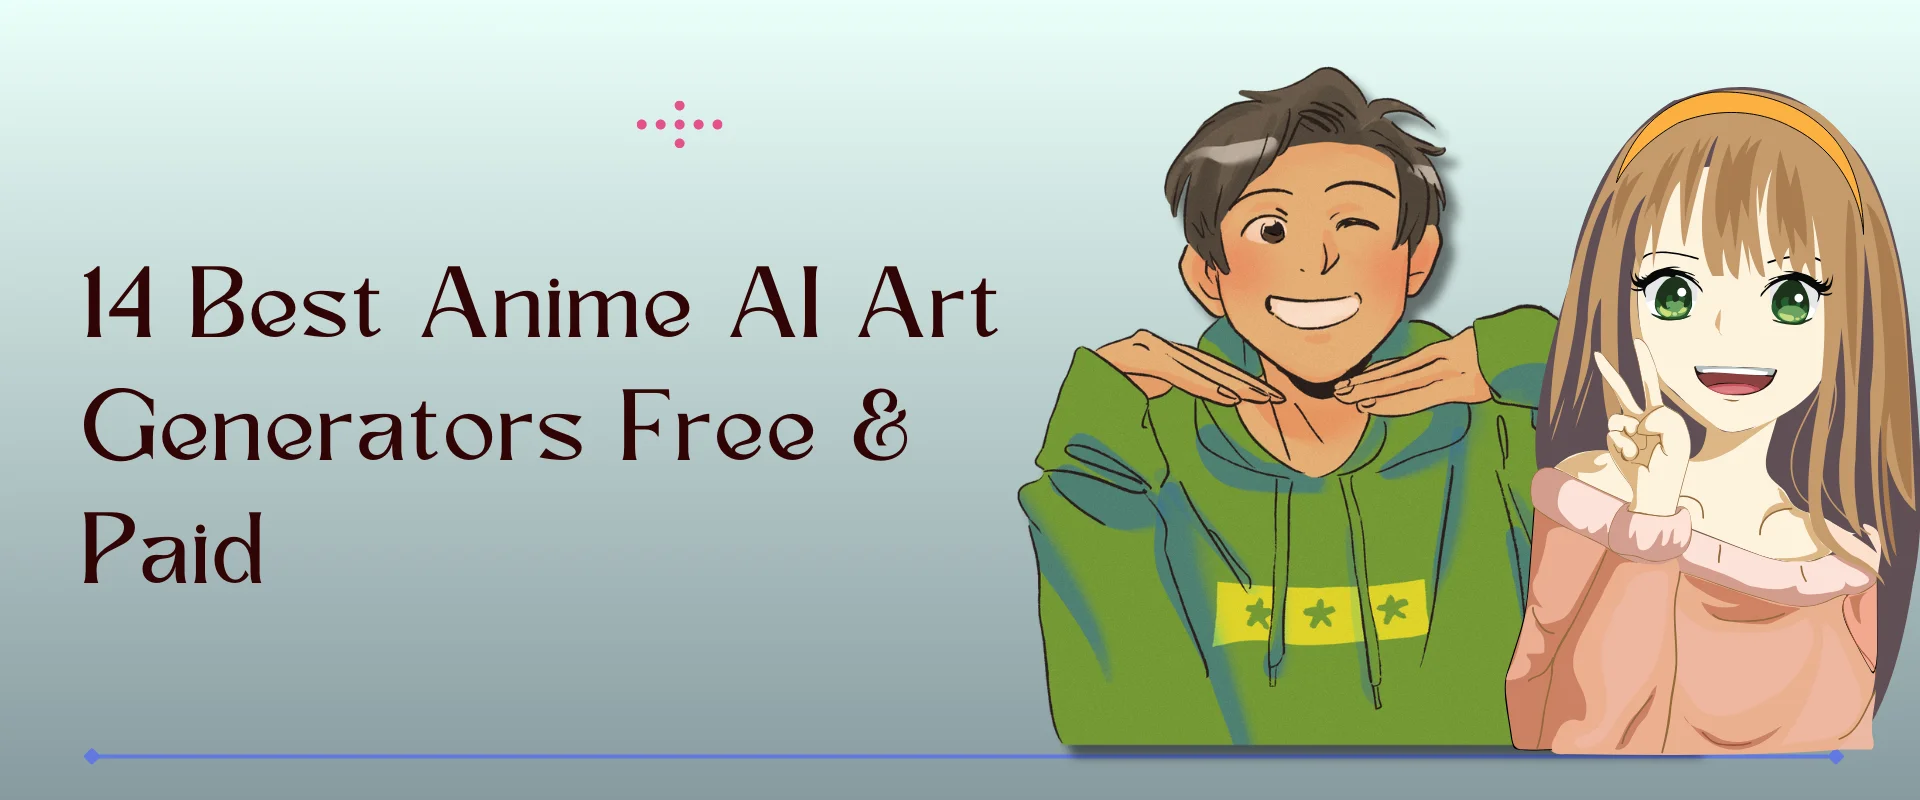 14 Best Anime AI Art Generators Free & Paid